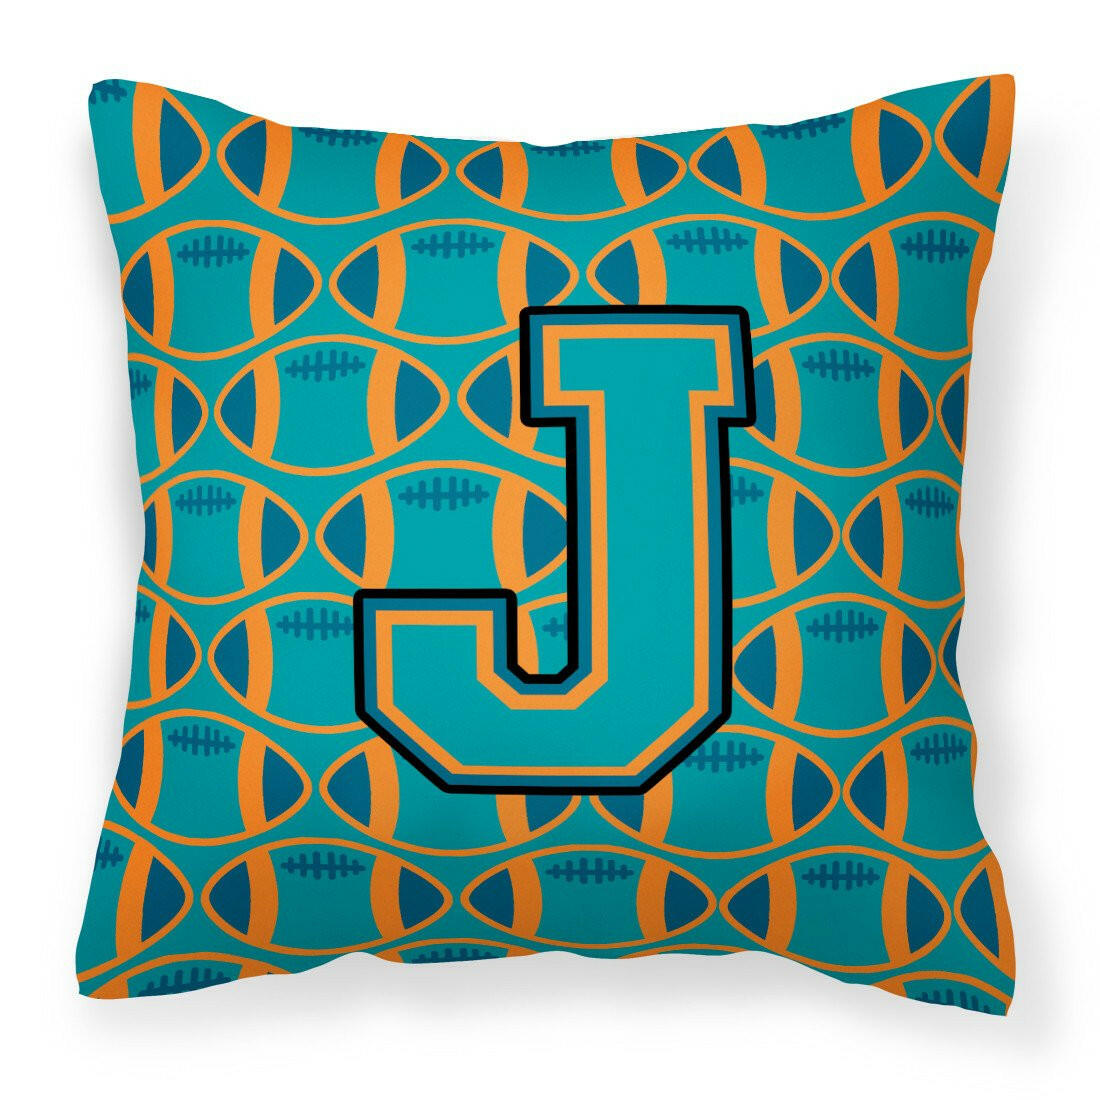 Letter J Football Aqua, Orange and Marine Blue Fabric Decorative Pillow CJ1063-JPW1414 by Caroline's Treasures